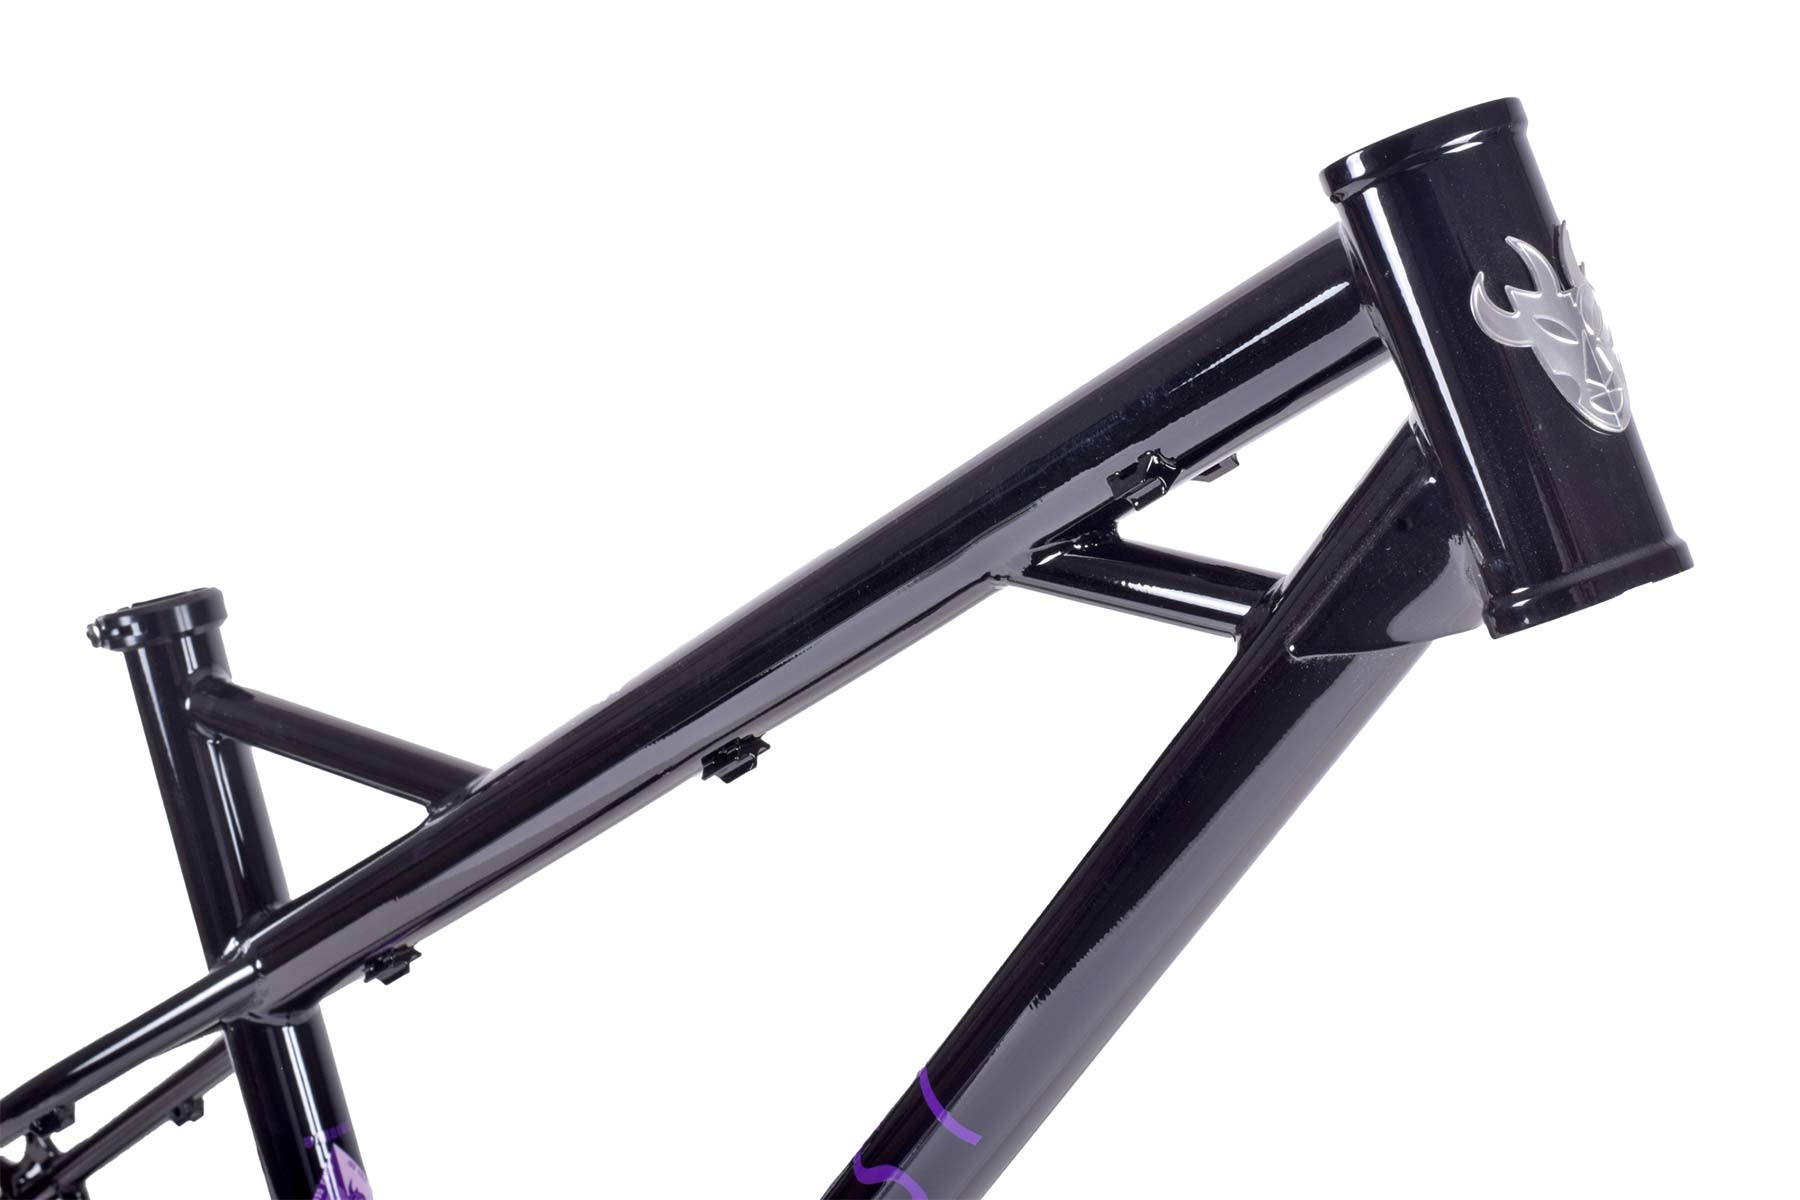 2022 Nordest Bardino 3 affordable steel enduro MTB hardtail mountain bike, head tube detail reinforced